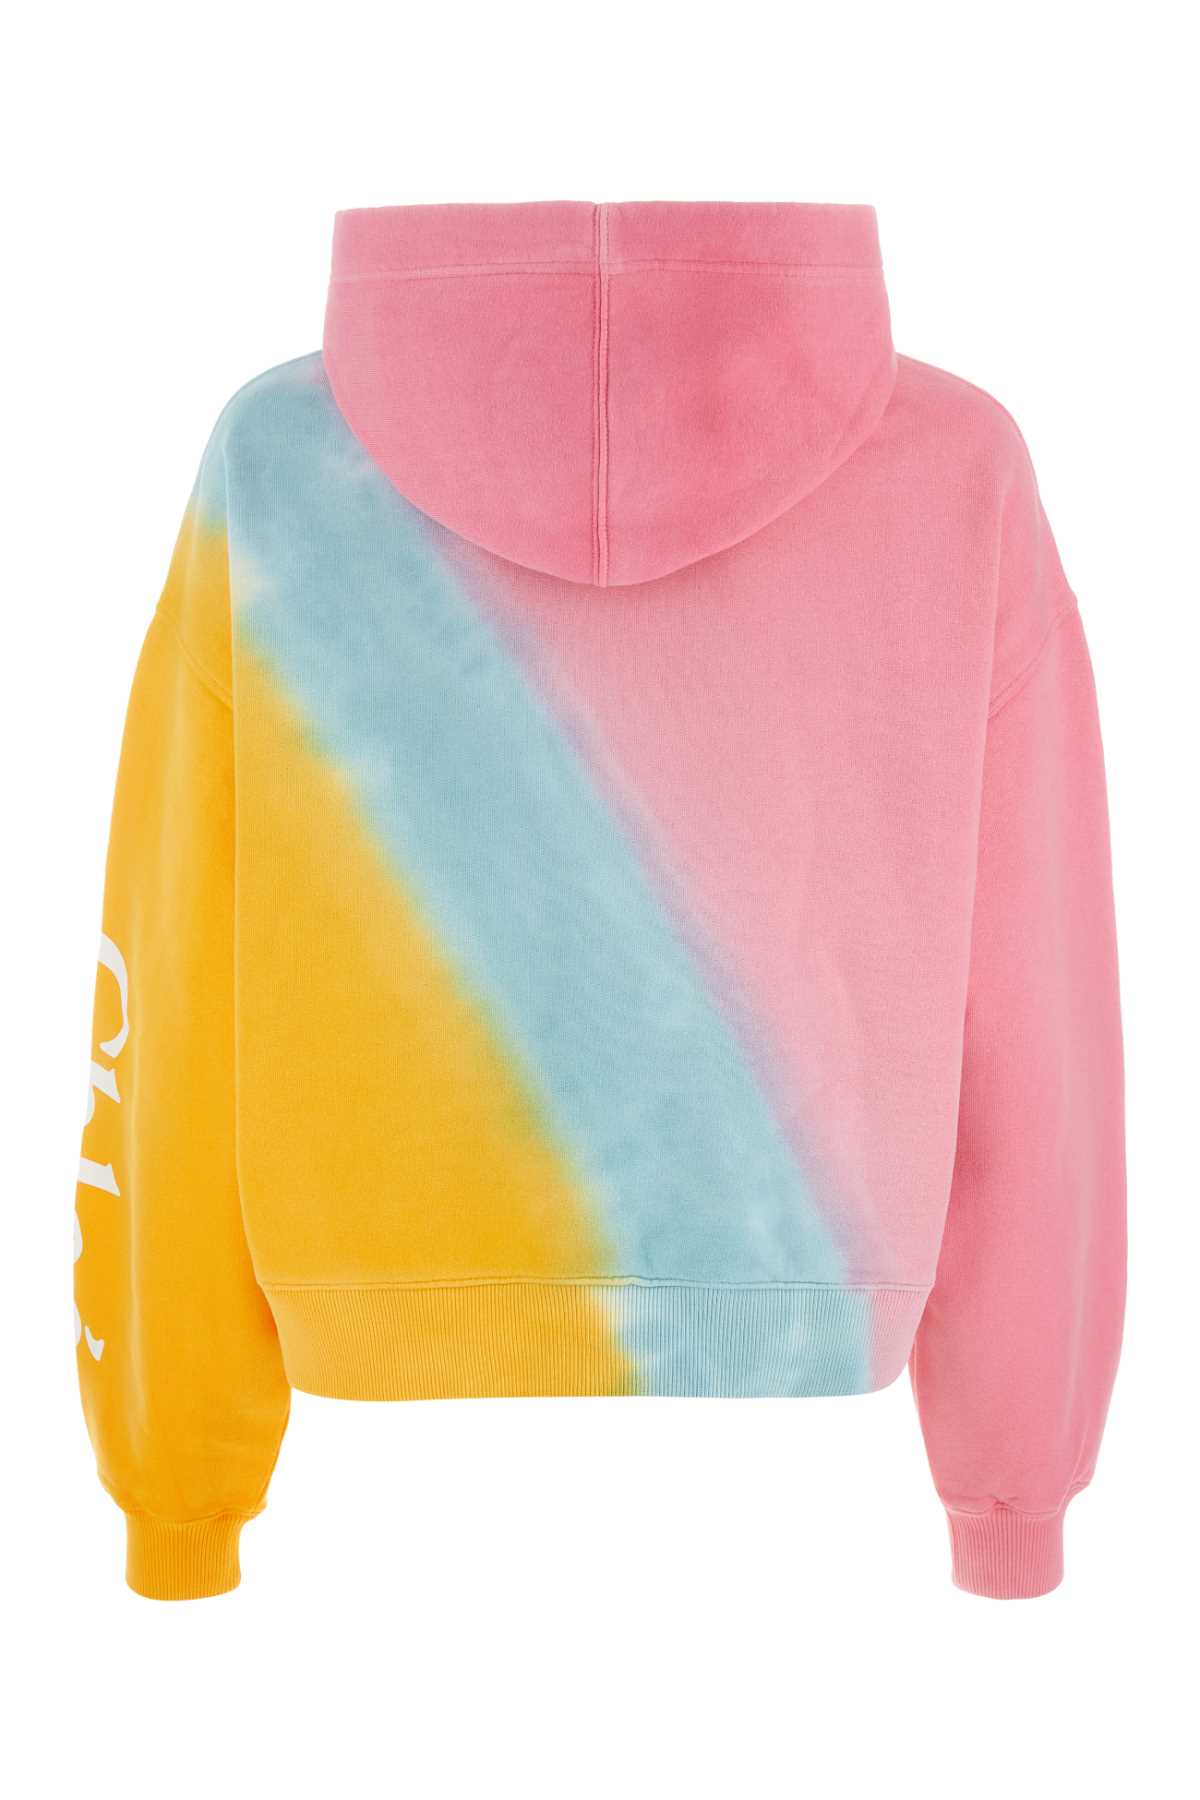 Chloé Multicolor Cotton Oversize Sweatshirt In Multicolorpink1